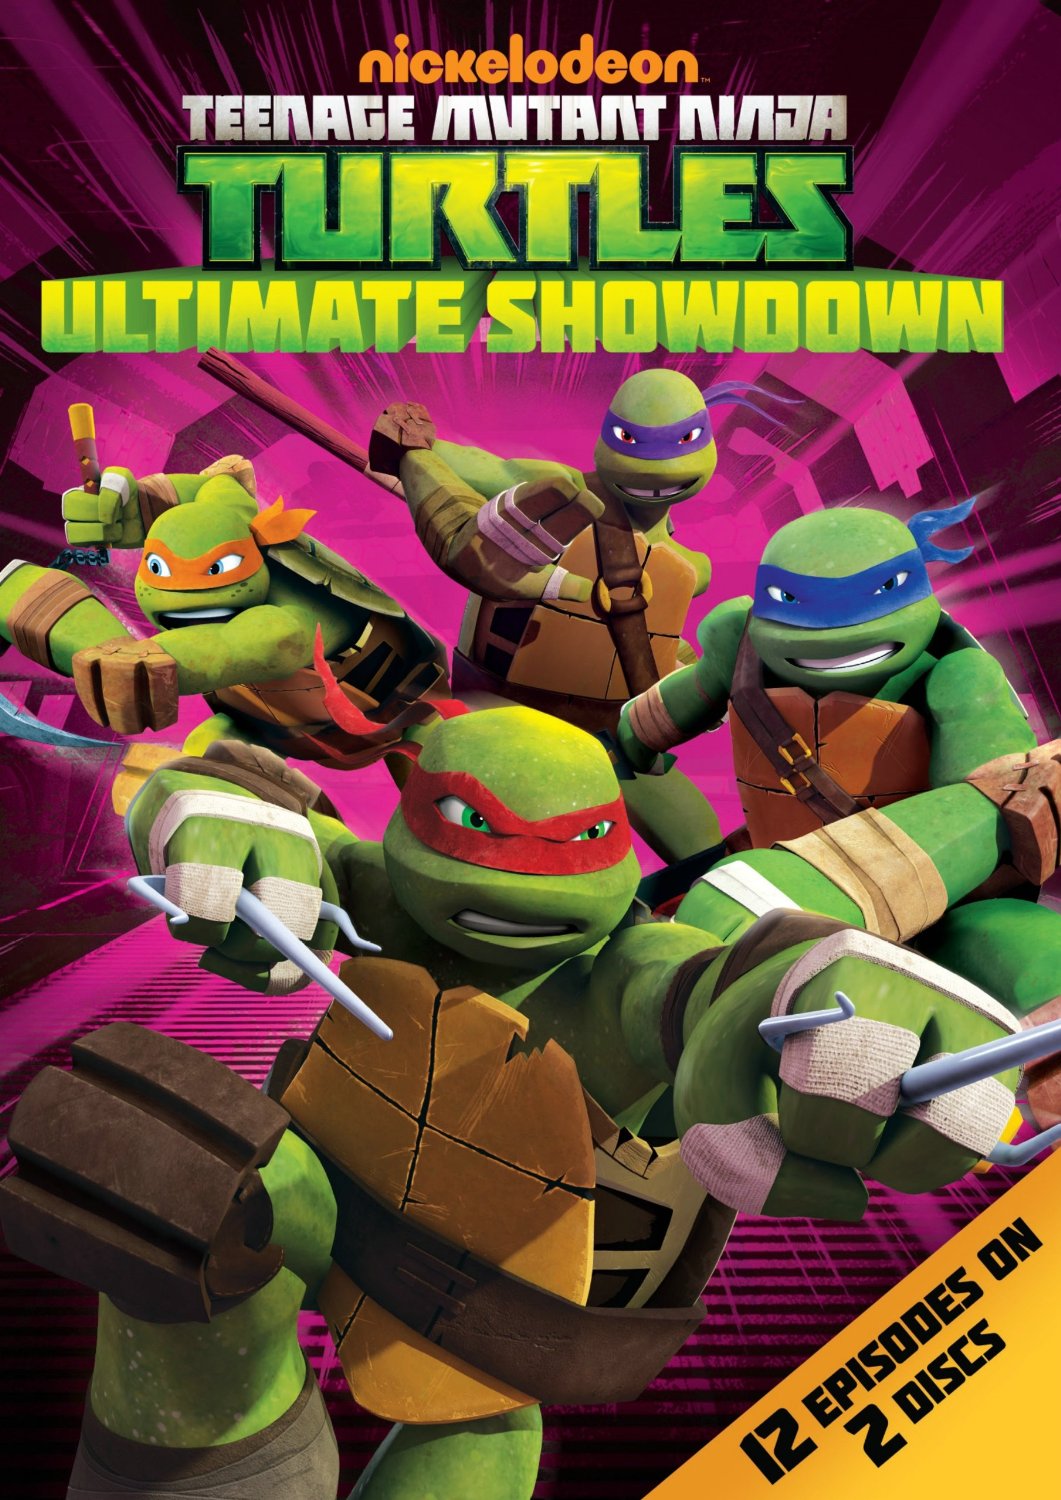 https://1.bp.blogspot.com/-44H4bFblY0M/UgLOVJxGulI/AAAAAAAAUTw/oxKV41Lyu-k/s1600/TMNT_DVD_Front-Nickelodeon-Teenage-Mutant-Ninja-Turtles-Ultimate-Showdown-Paramount-Home-Media-Entertainment-NHE-PHM-USA-Region-1-Nick-USA-Artwork-Art.jpg